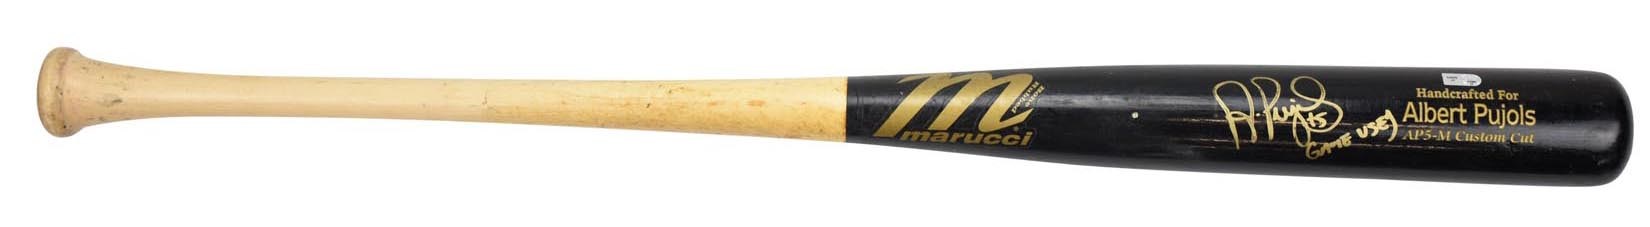 Baseball Equipment - 2010 Albert Pujols Signed Game Used "Home Run" Bat (Photo-Matched & MLB Auth.)